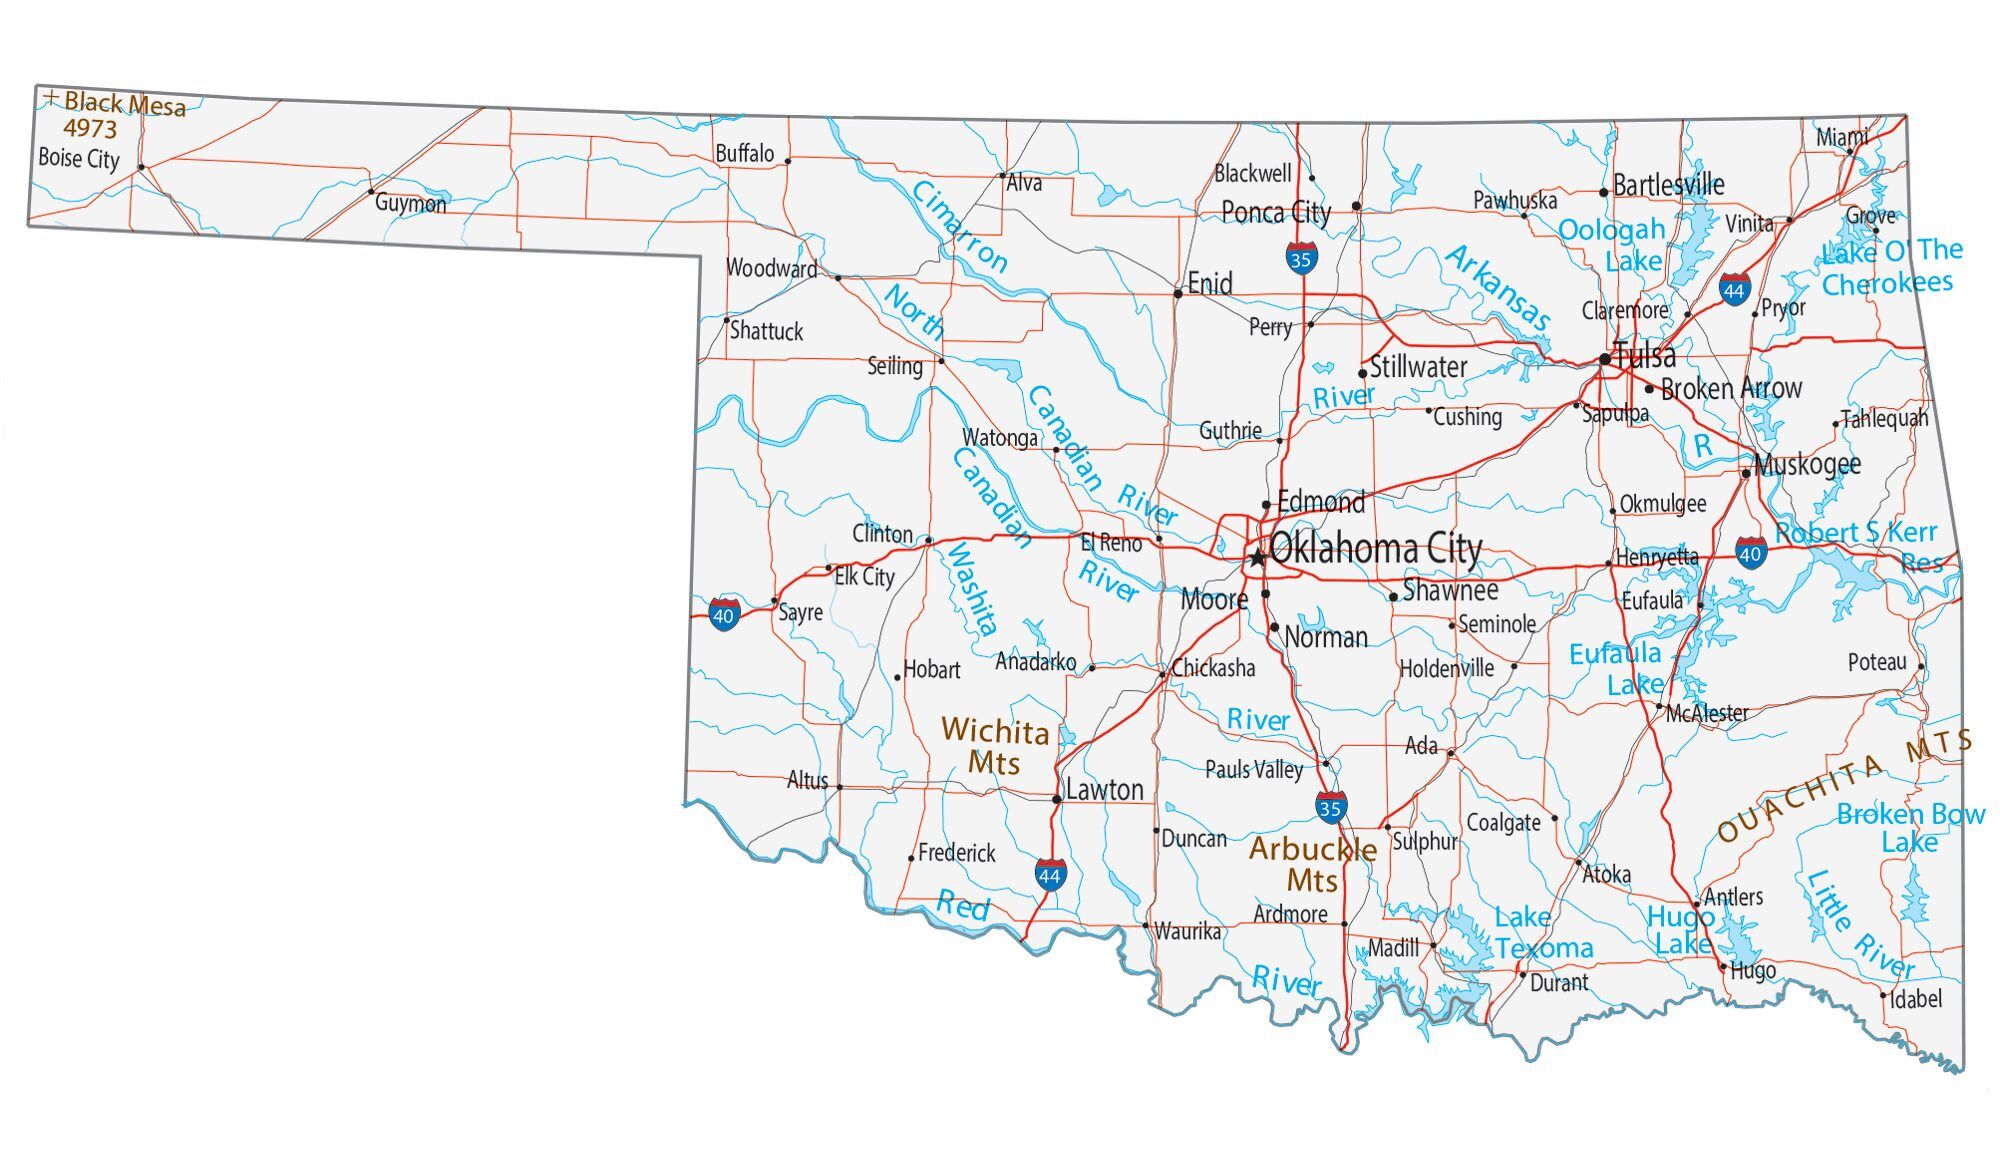 oklahoma town not found on road atlas